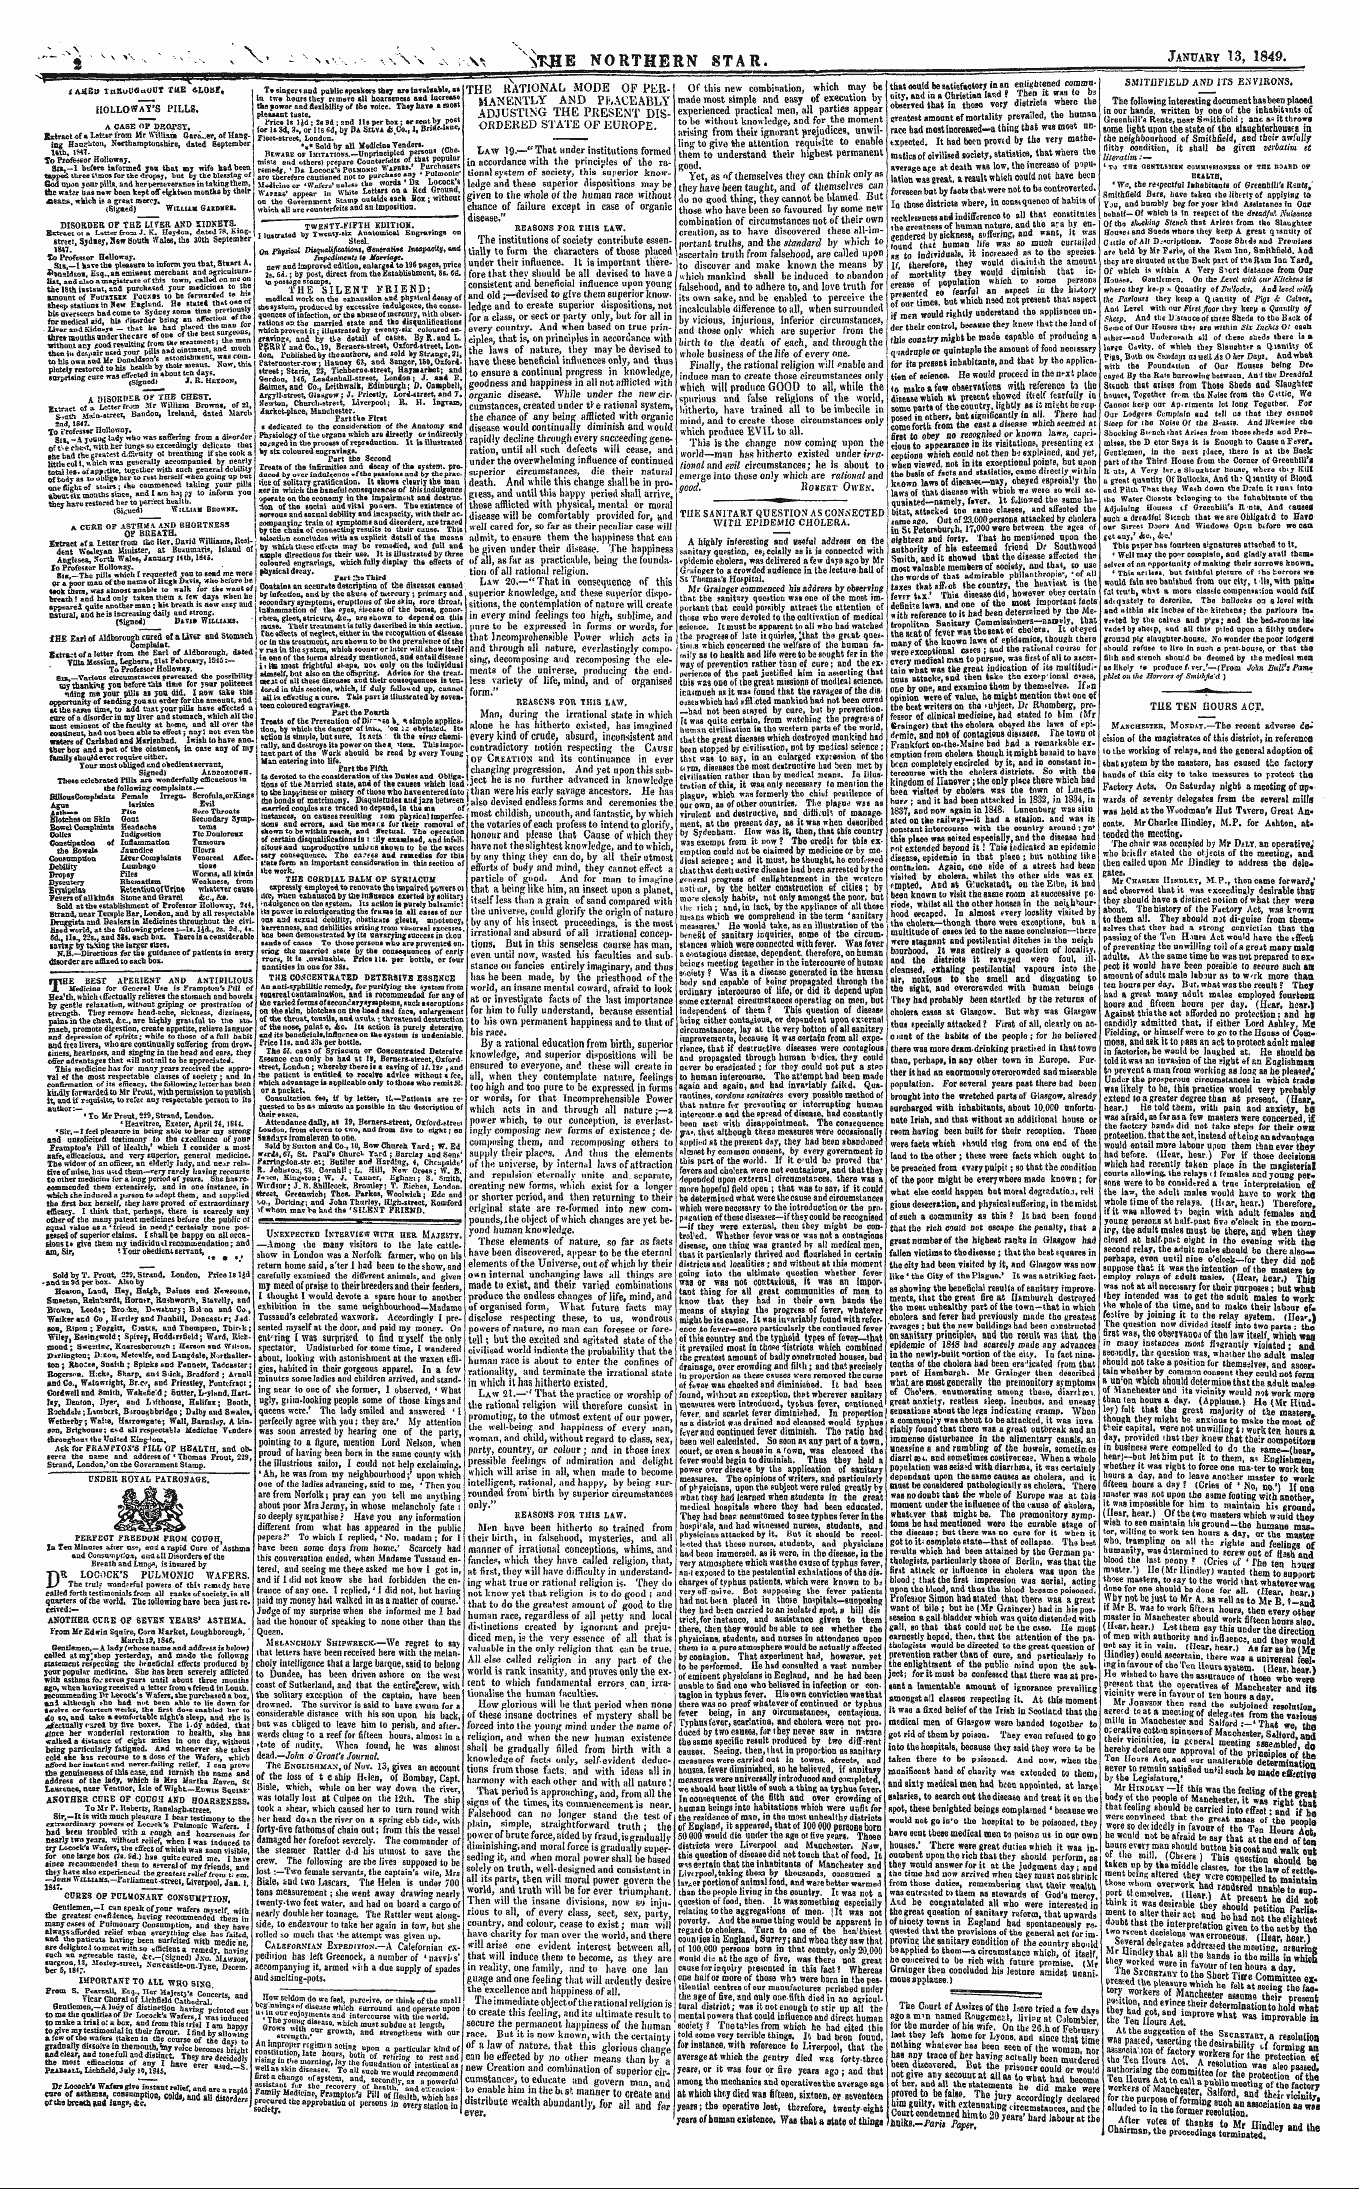 Northern Star (1837-1852): jS F Y, 3rd edition - Ad00213